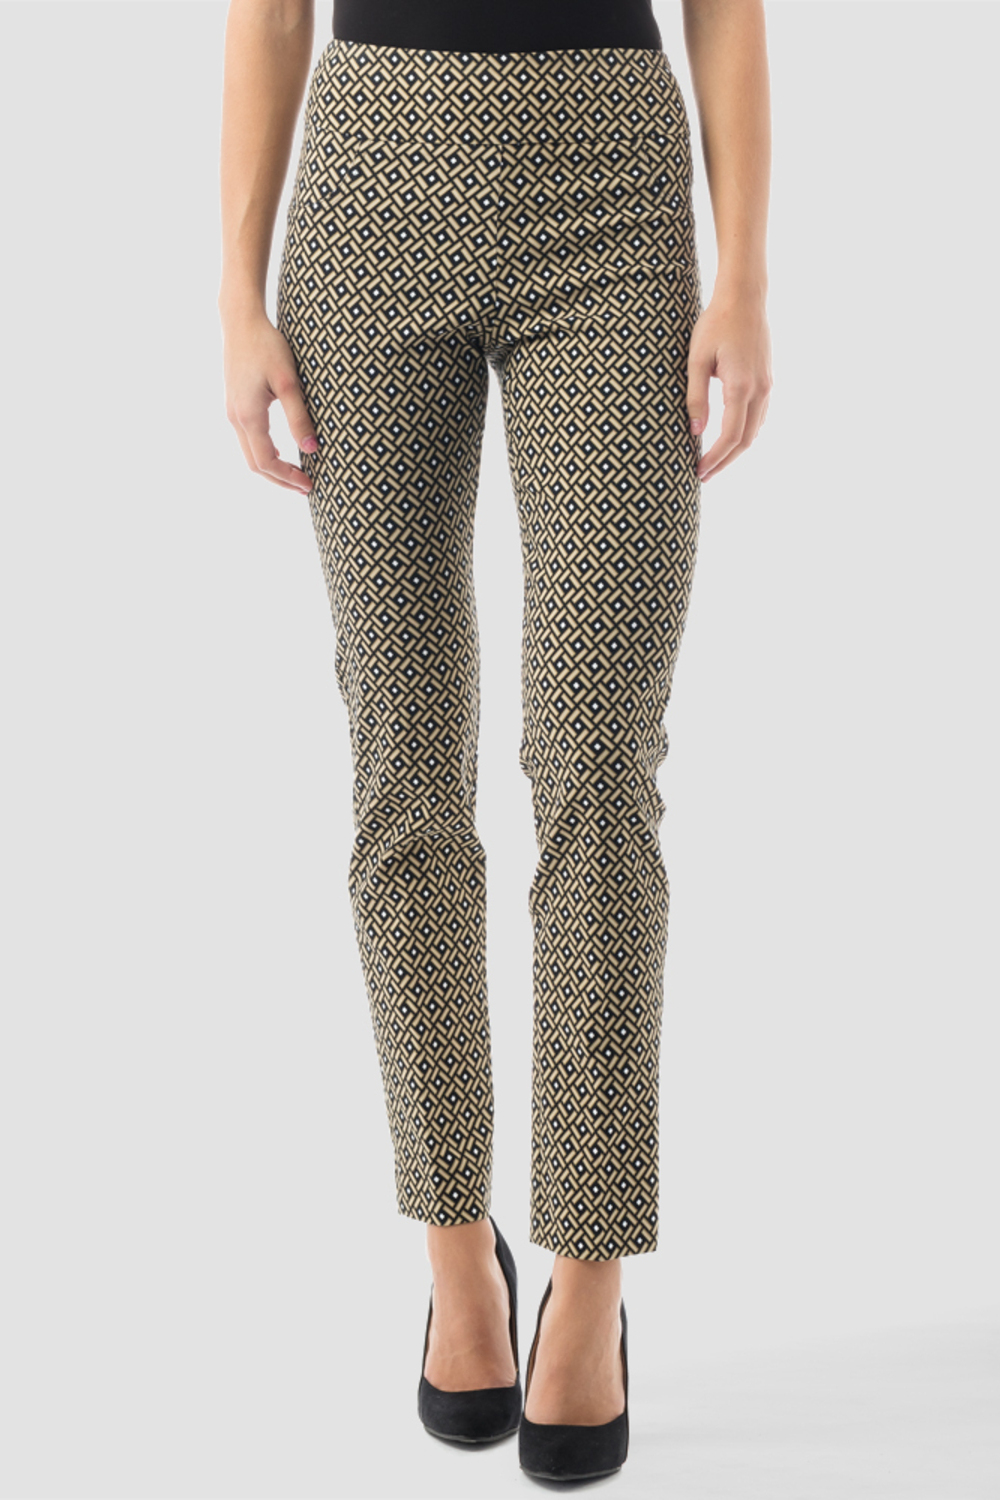 Joseph Ribkoff pantalon style 161774. Beige/noir